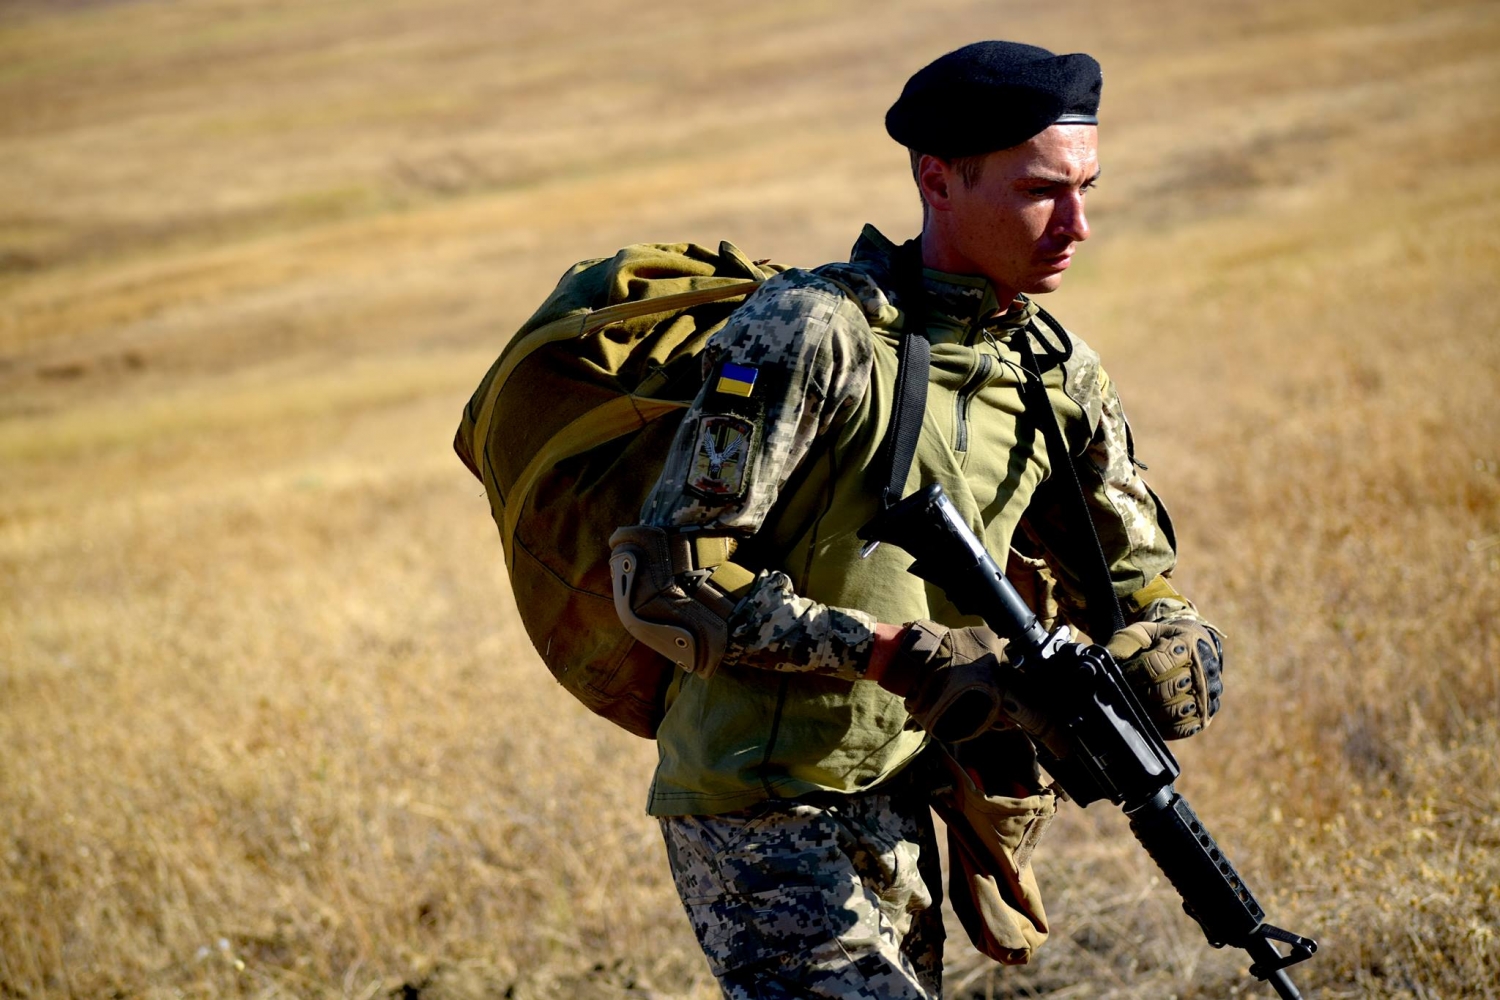 Ukrainian armed